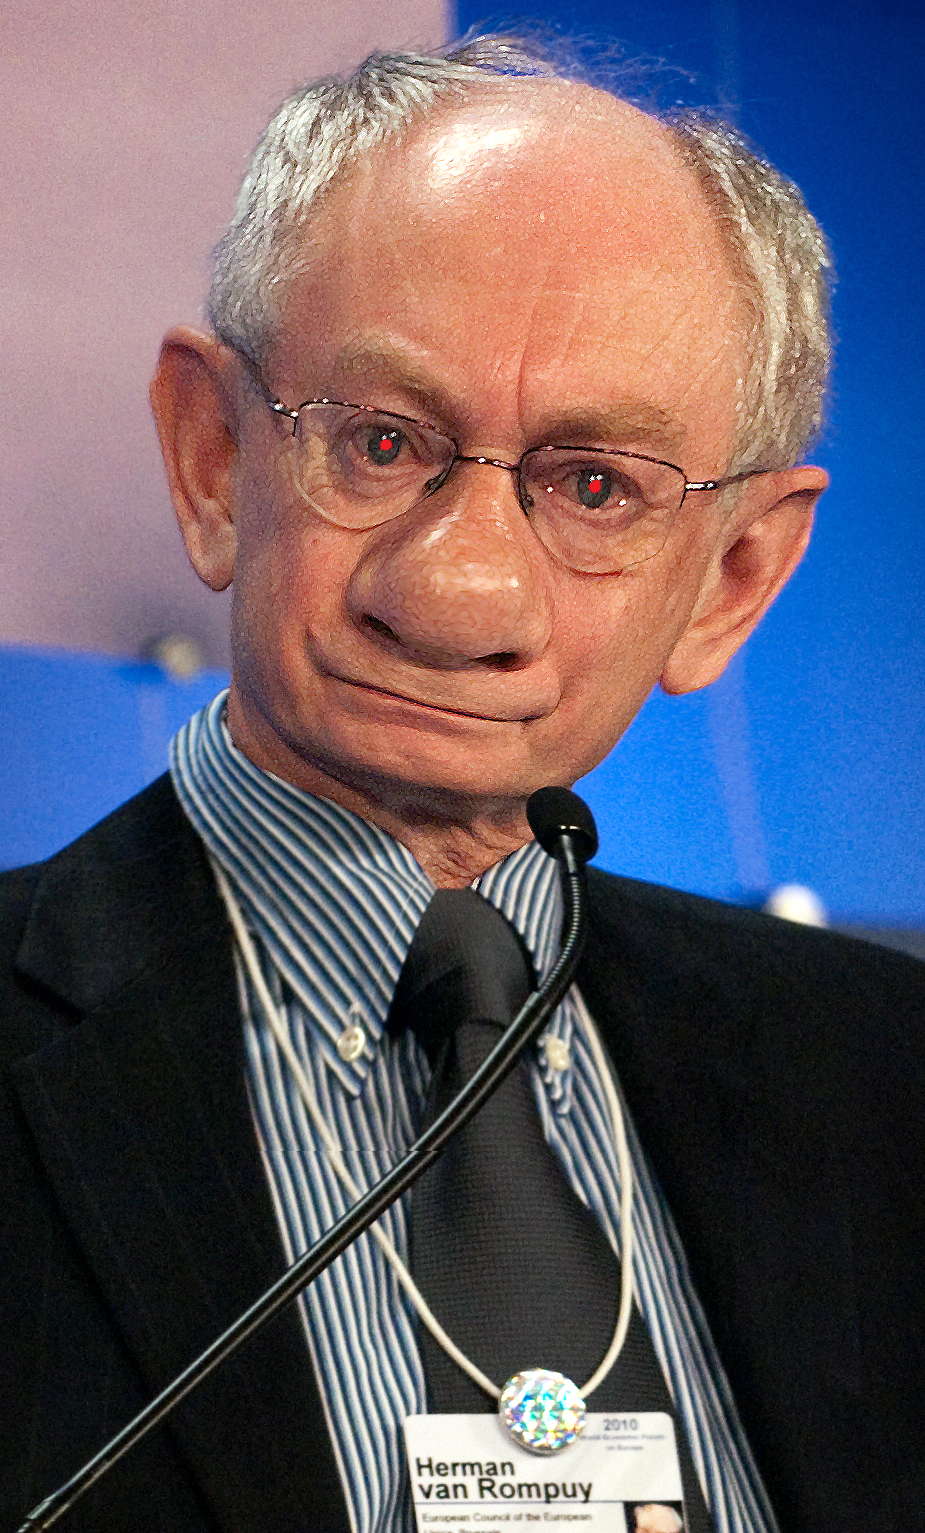 Herman_Van_Rompuy_-_World_Economic_Forum_on_Europe_2010_2